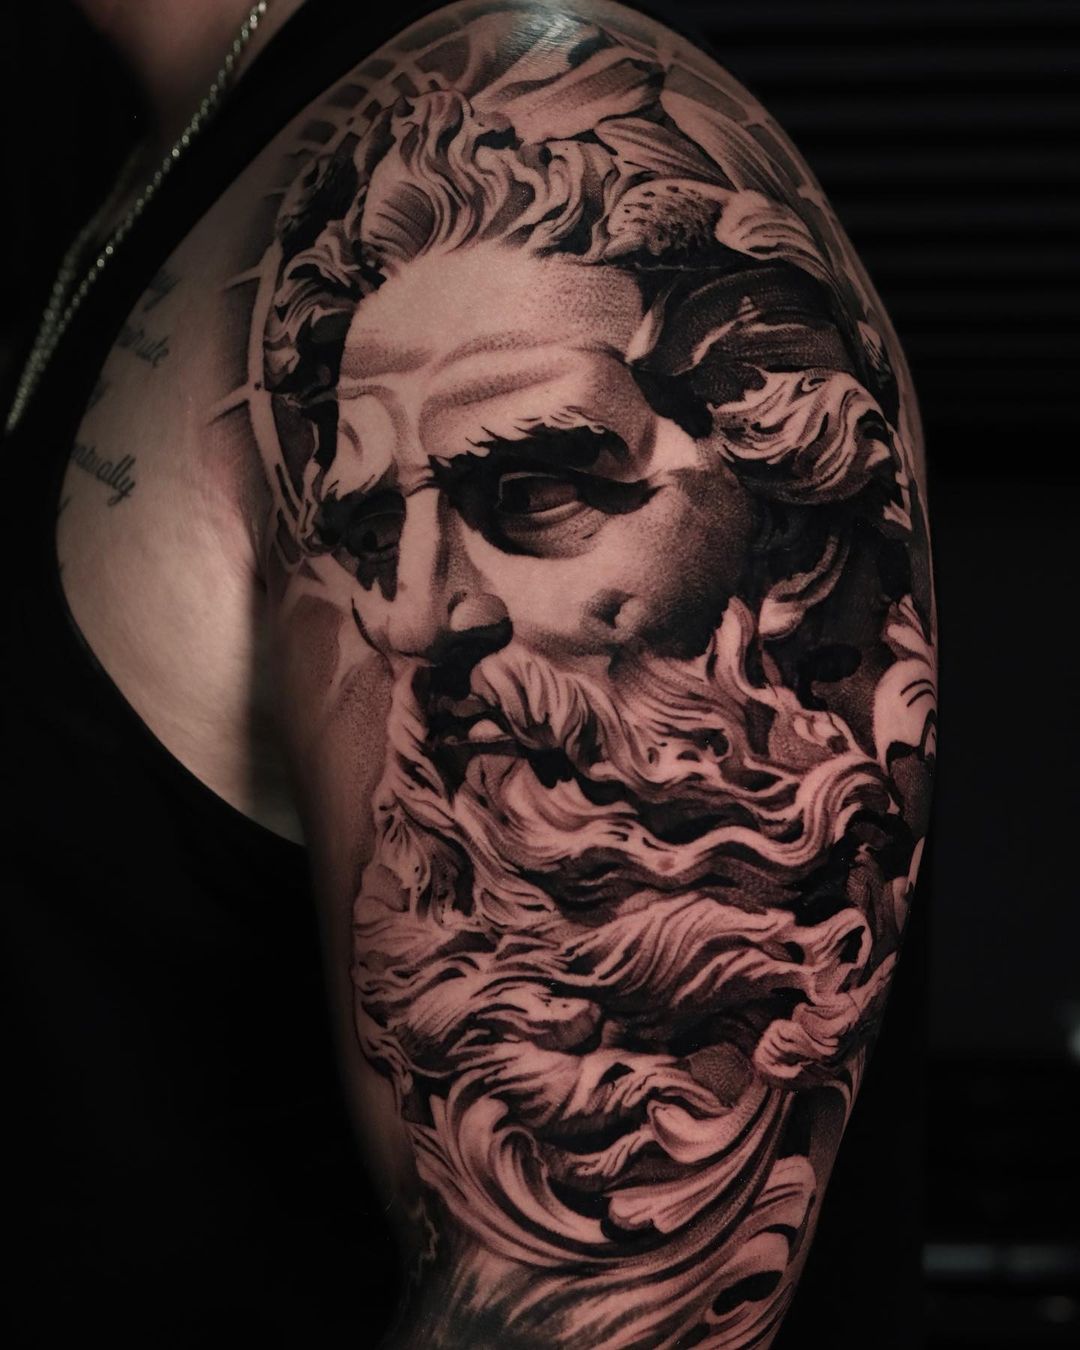 Tattoo uploaded by Alo Loco Tattoo • Neptune, God of the sea, portrait  sleeve tattoo in black and grey realism, London, UK | #blackandgreytattoos  #realistictattoos #neptunetattoos #sleevetattoos #portraittattoos • Tattoodo